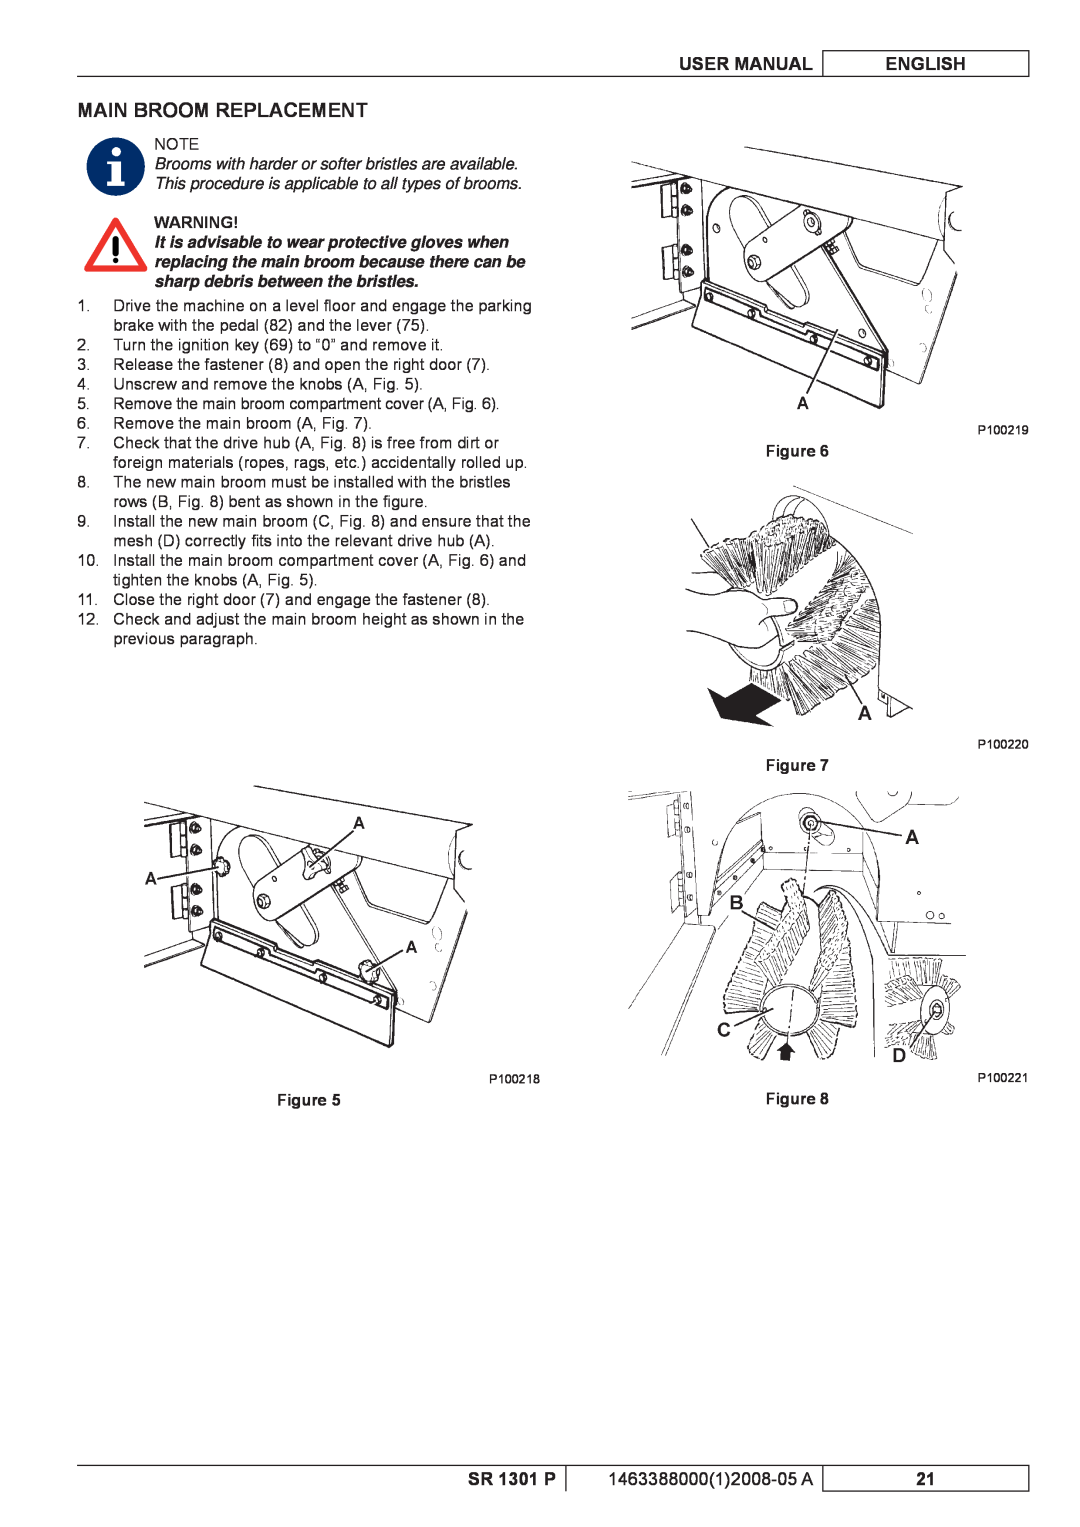 Nilfisk-ALTO SR 1301 P manuel dutilisation Main Broom Replacement, User Manual, English, 146338800012008-05 A 